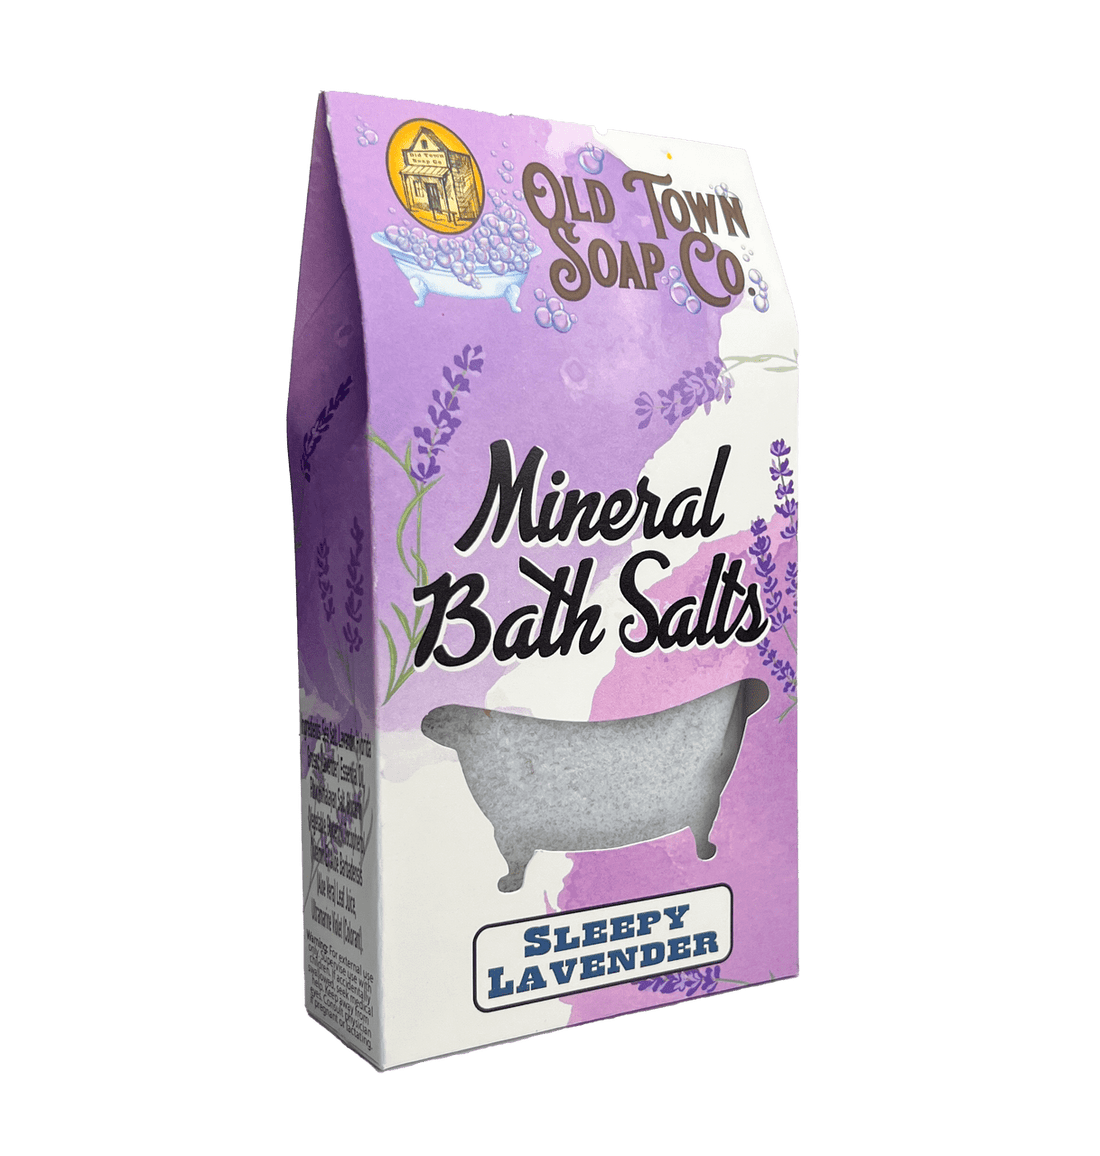 Sleepy Lavender Bath Salts - Old Town Soap Co.